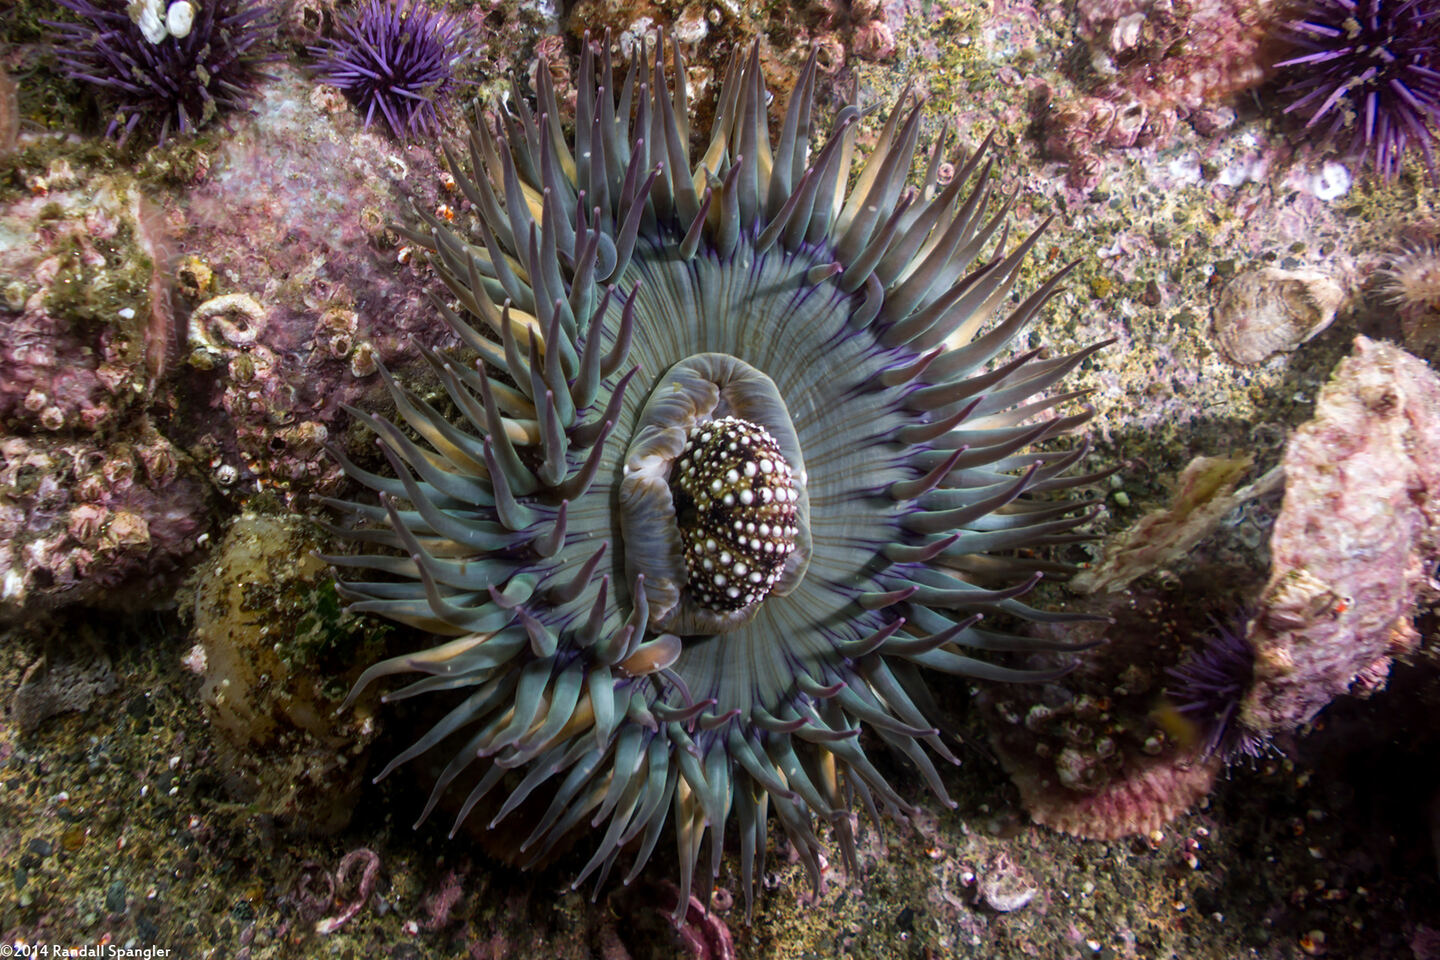 Anthopleura sola (Sunburst Anemone); Regurgitating an urchin test